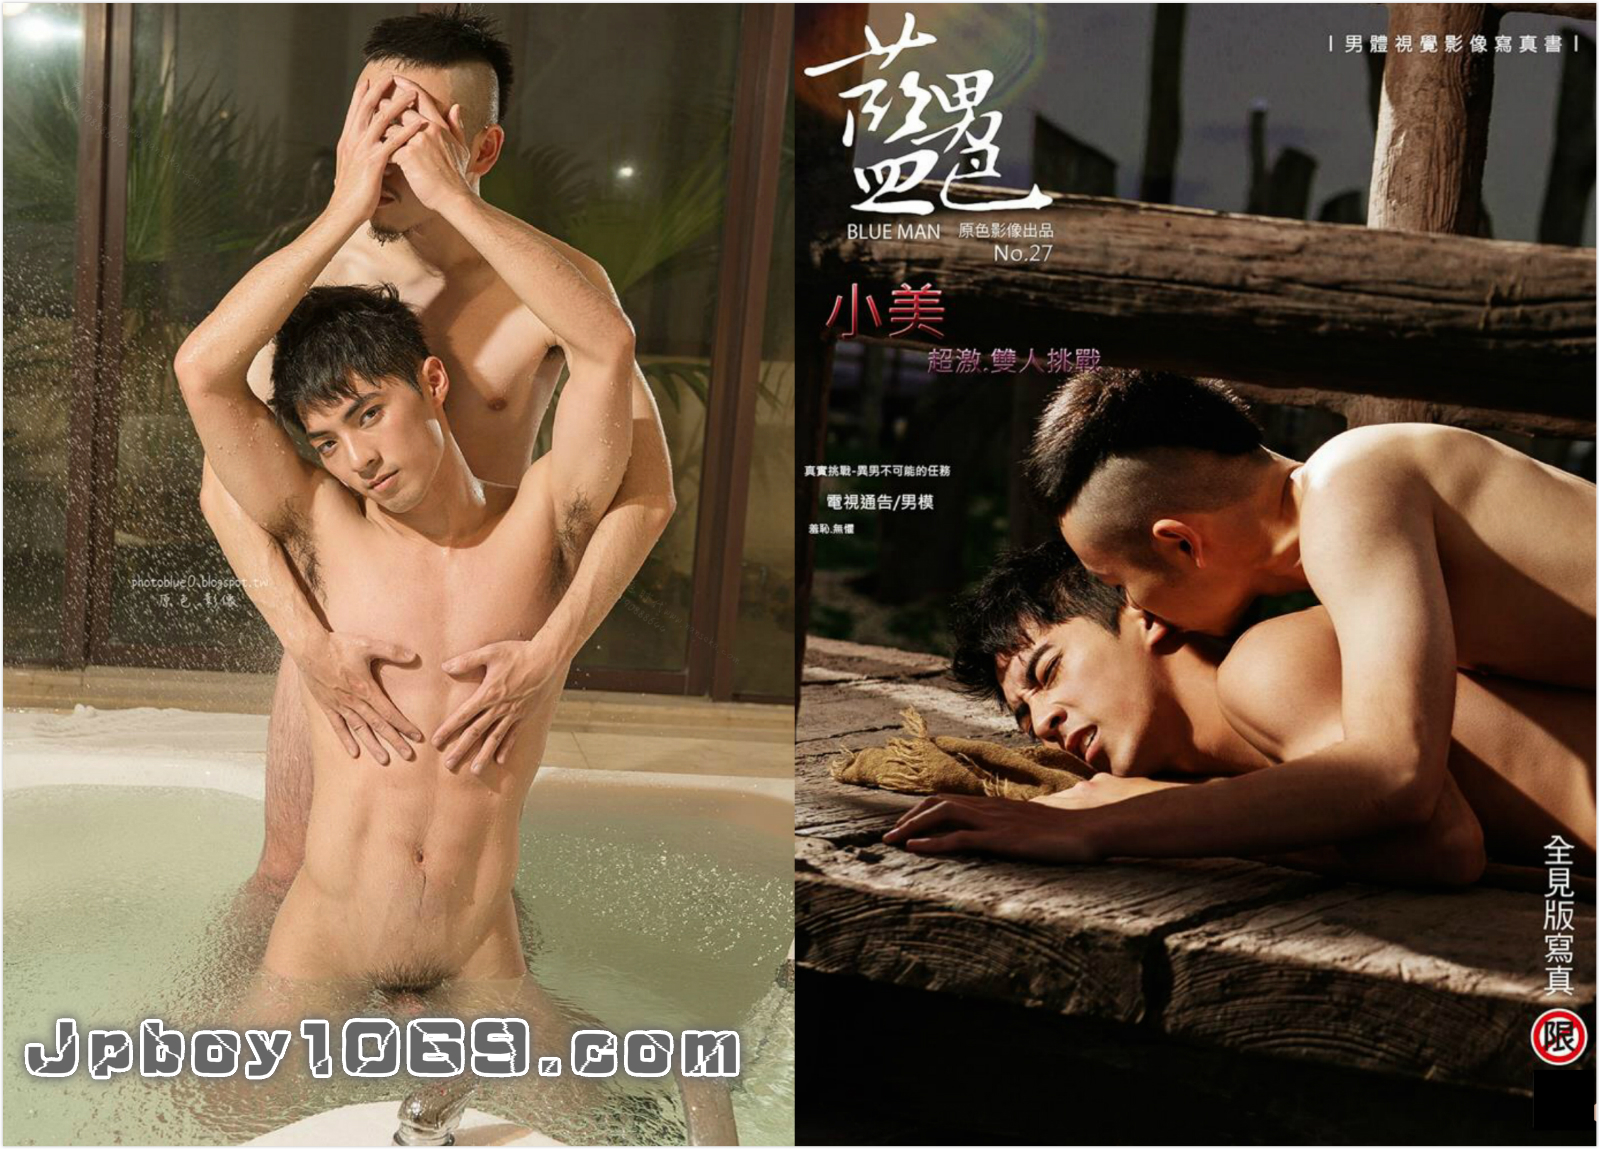 jpboy1069.com | Download Asian Gay Porn Movies & Videos Â» [PHOTO SET] BLUE  MAN 27